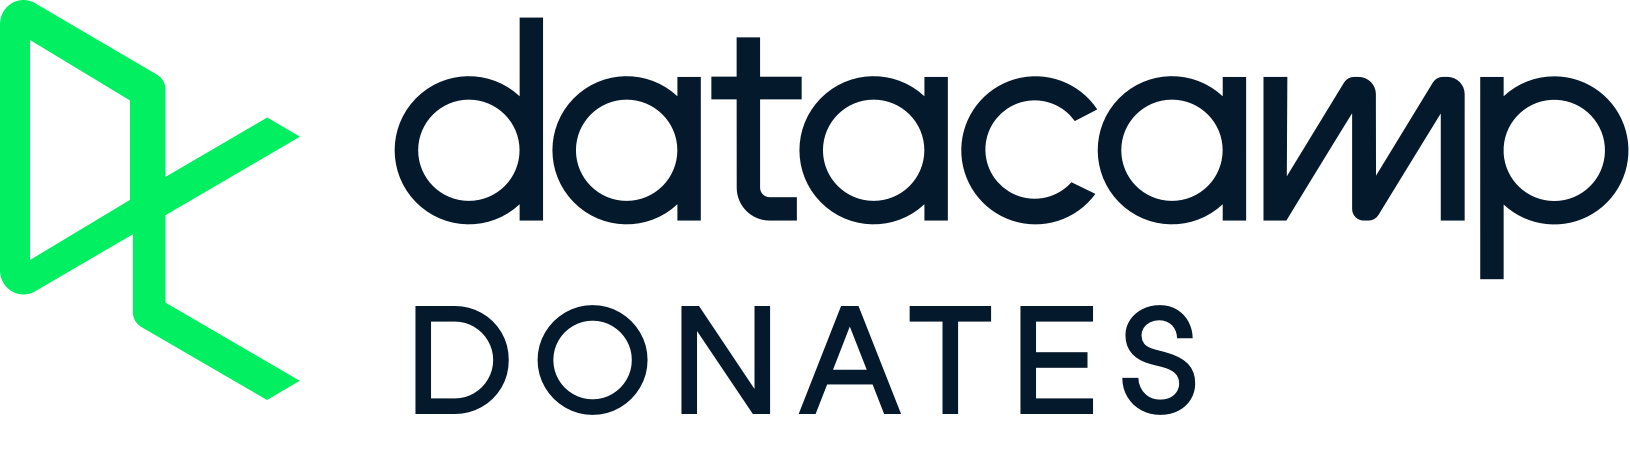 Logo DataCamp